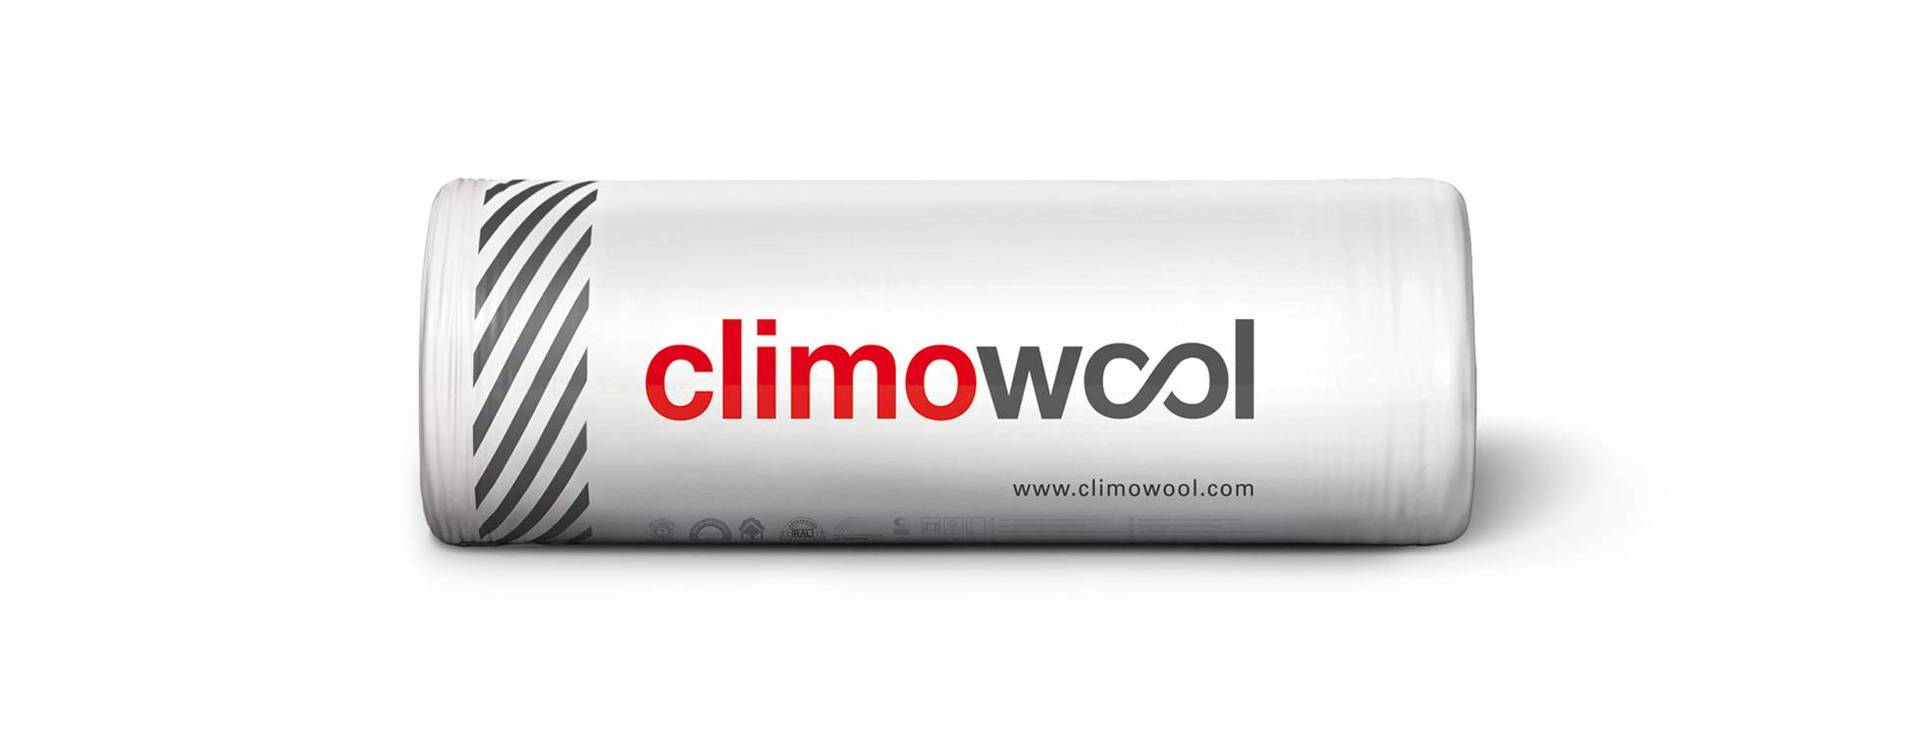 Verpackung der Climowool-Glasfaserrolle